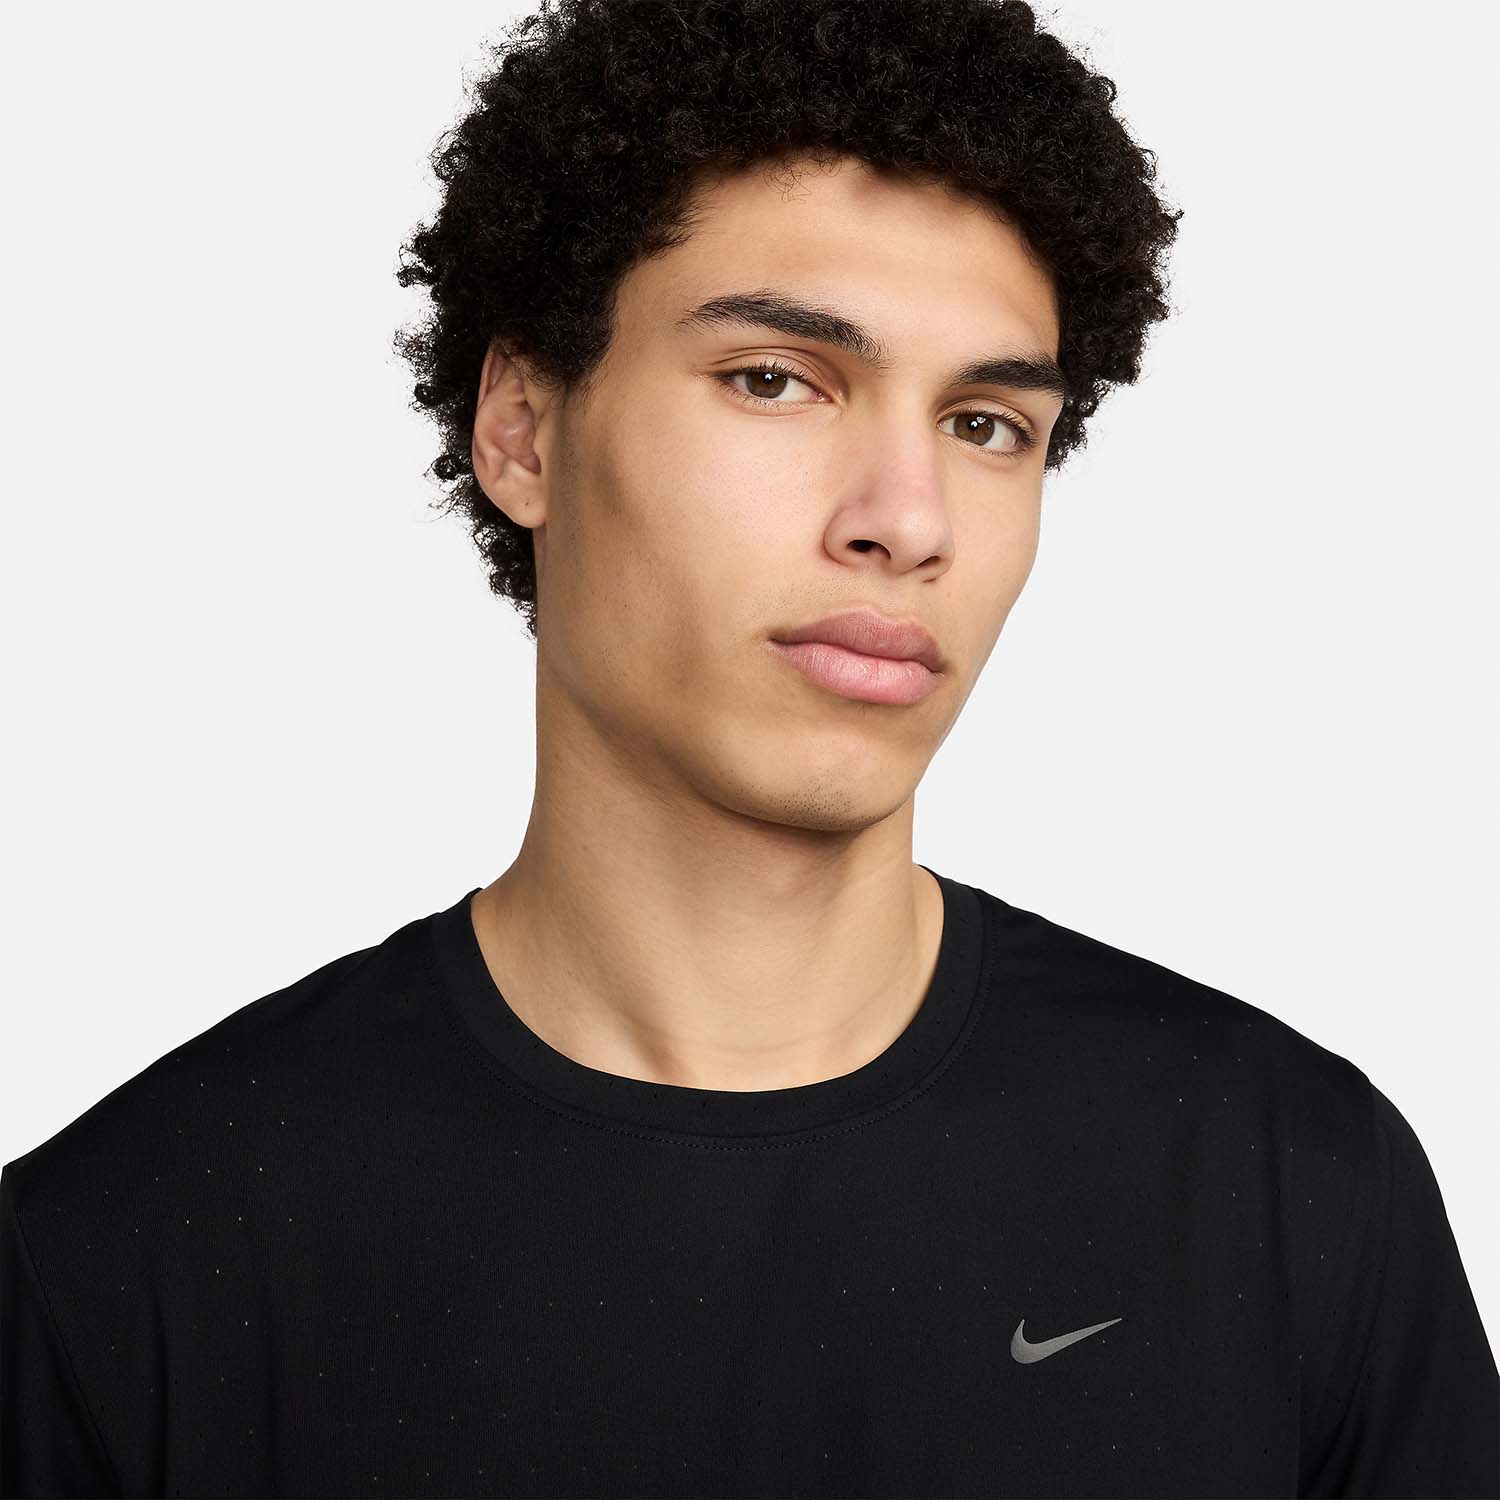 Nike Dri-FIT ADV Run Div Camiseta - Black/Black Reflective